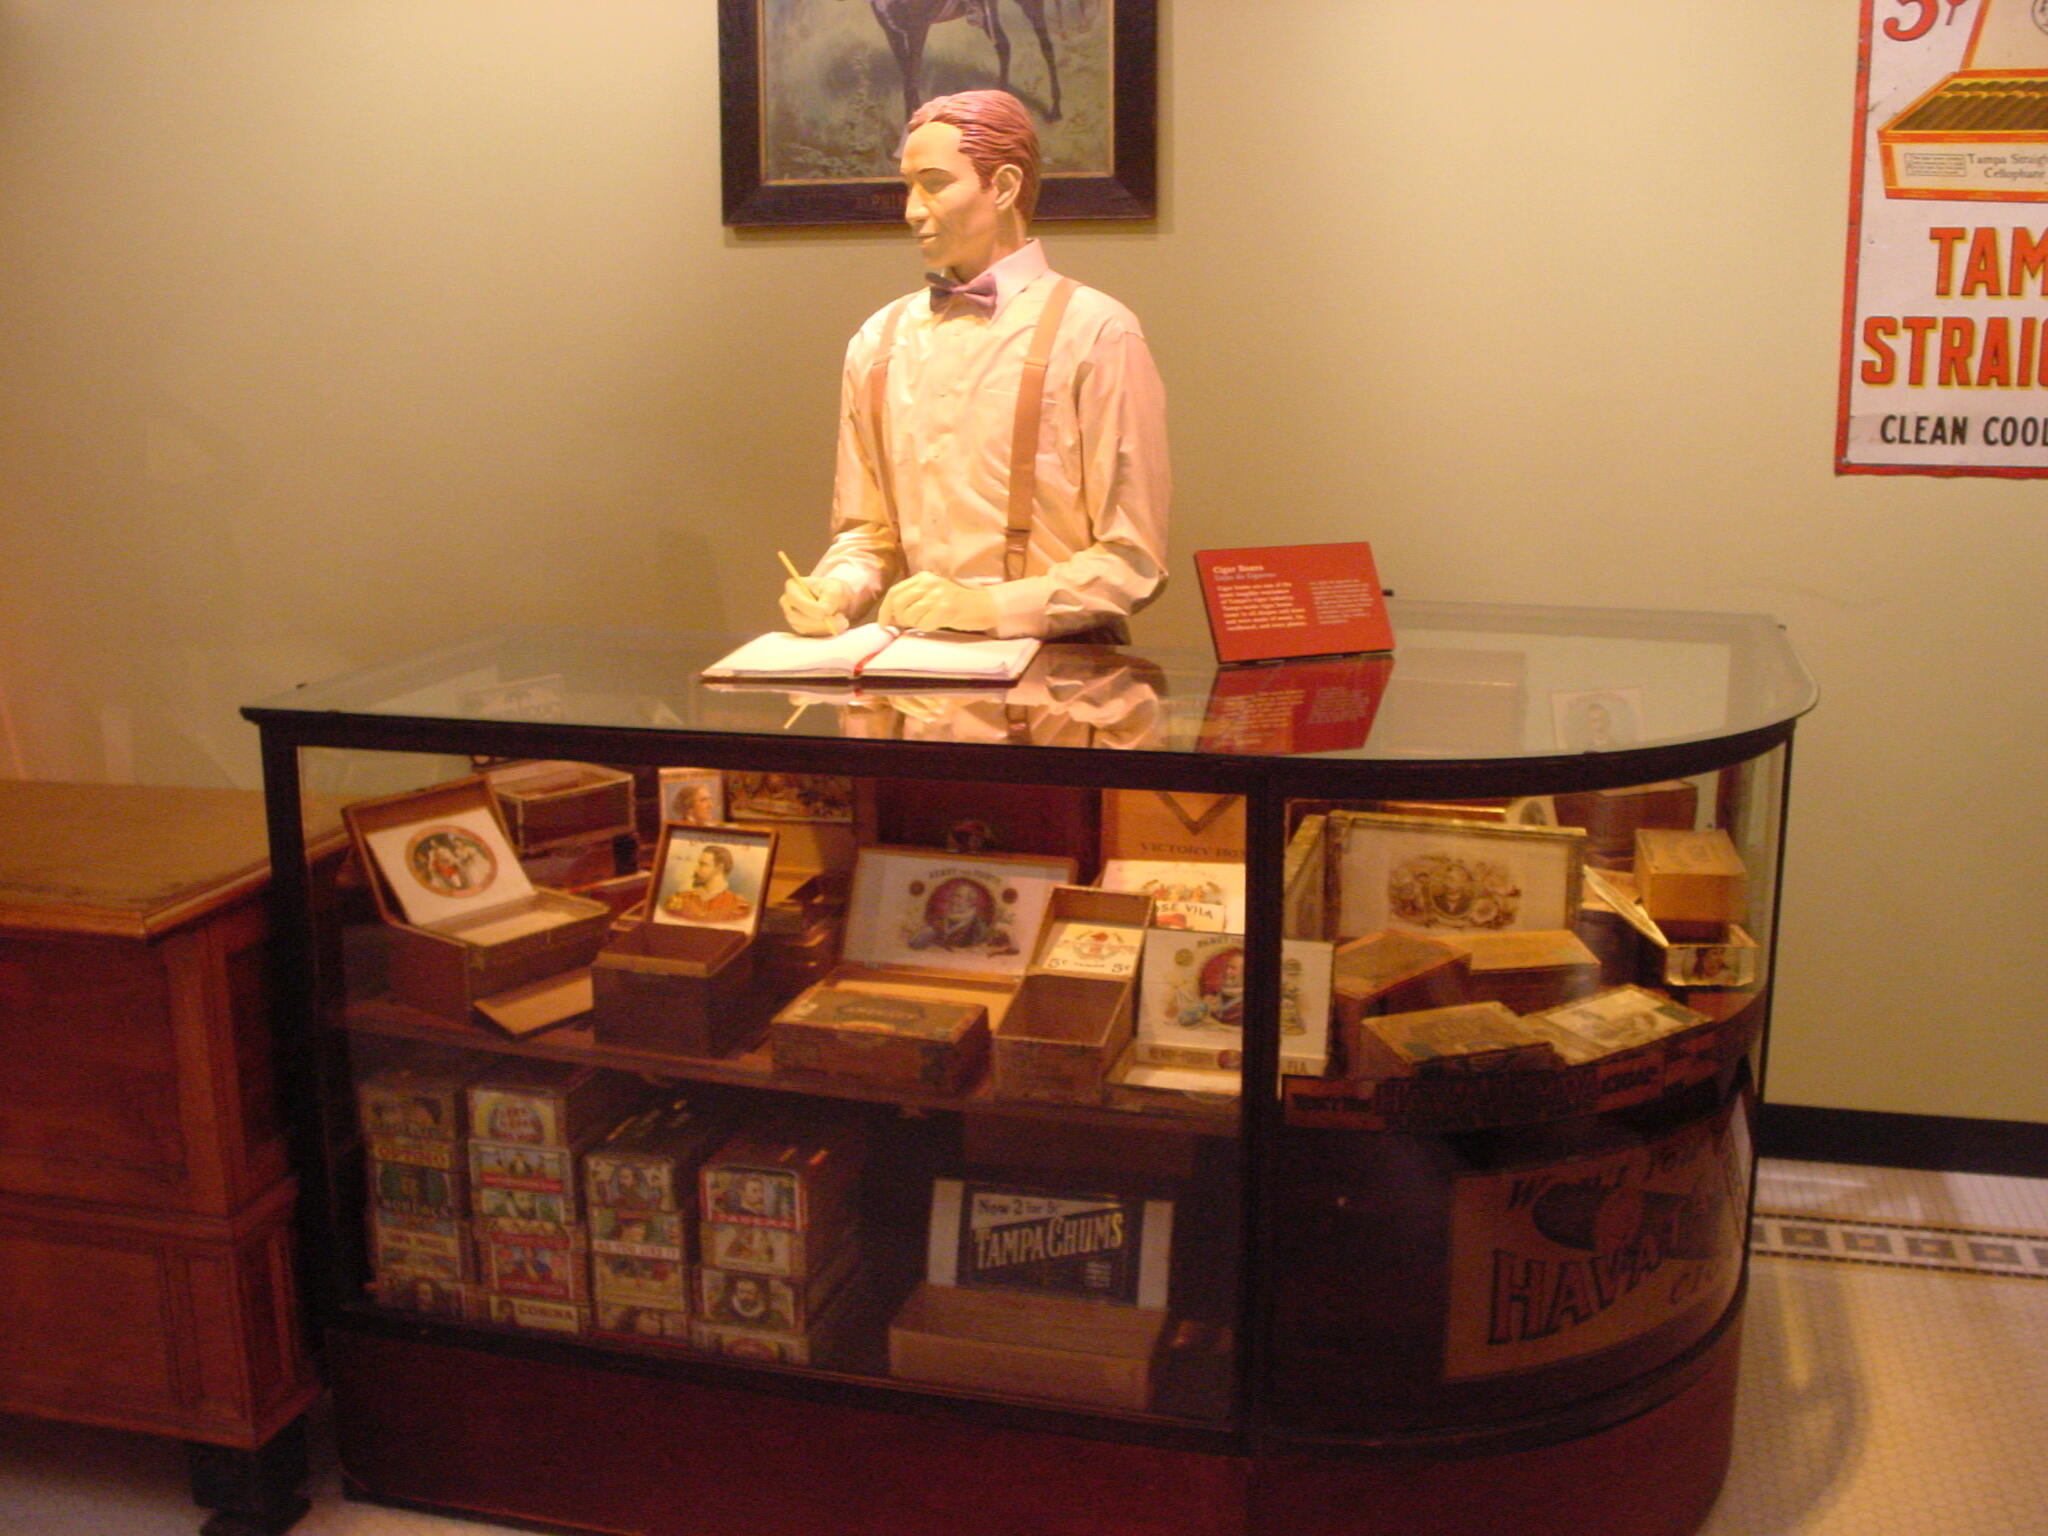 Part of the walk through Cigar City display at the Tampa Bay History Center in Tampa, Florida.